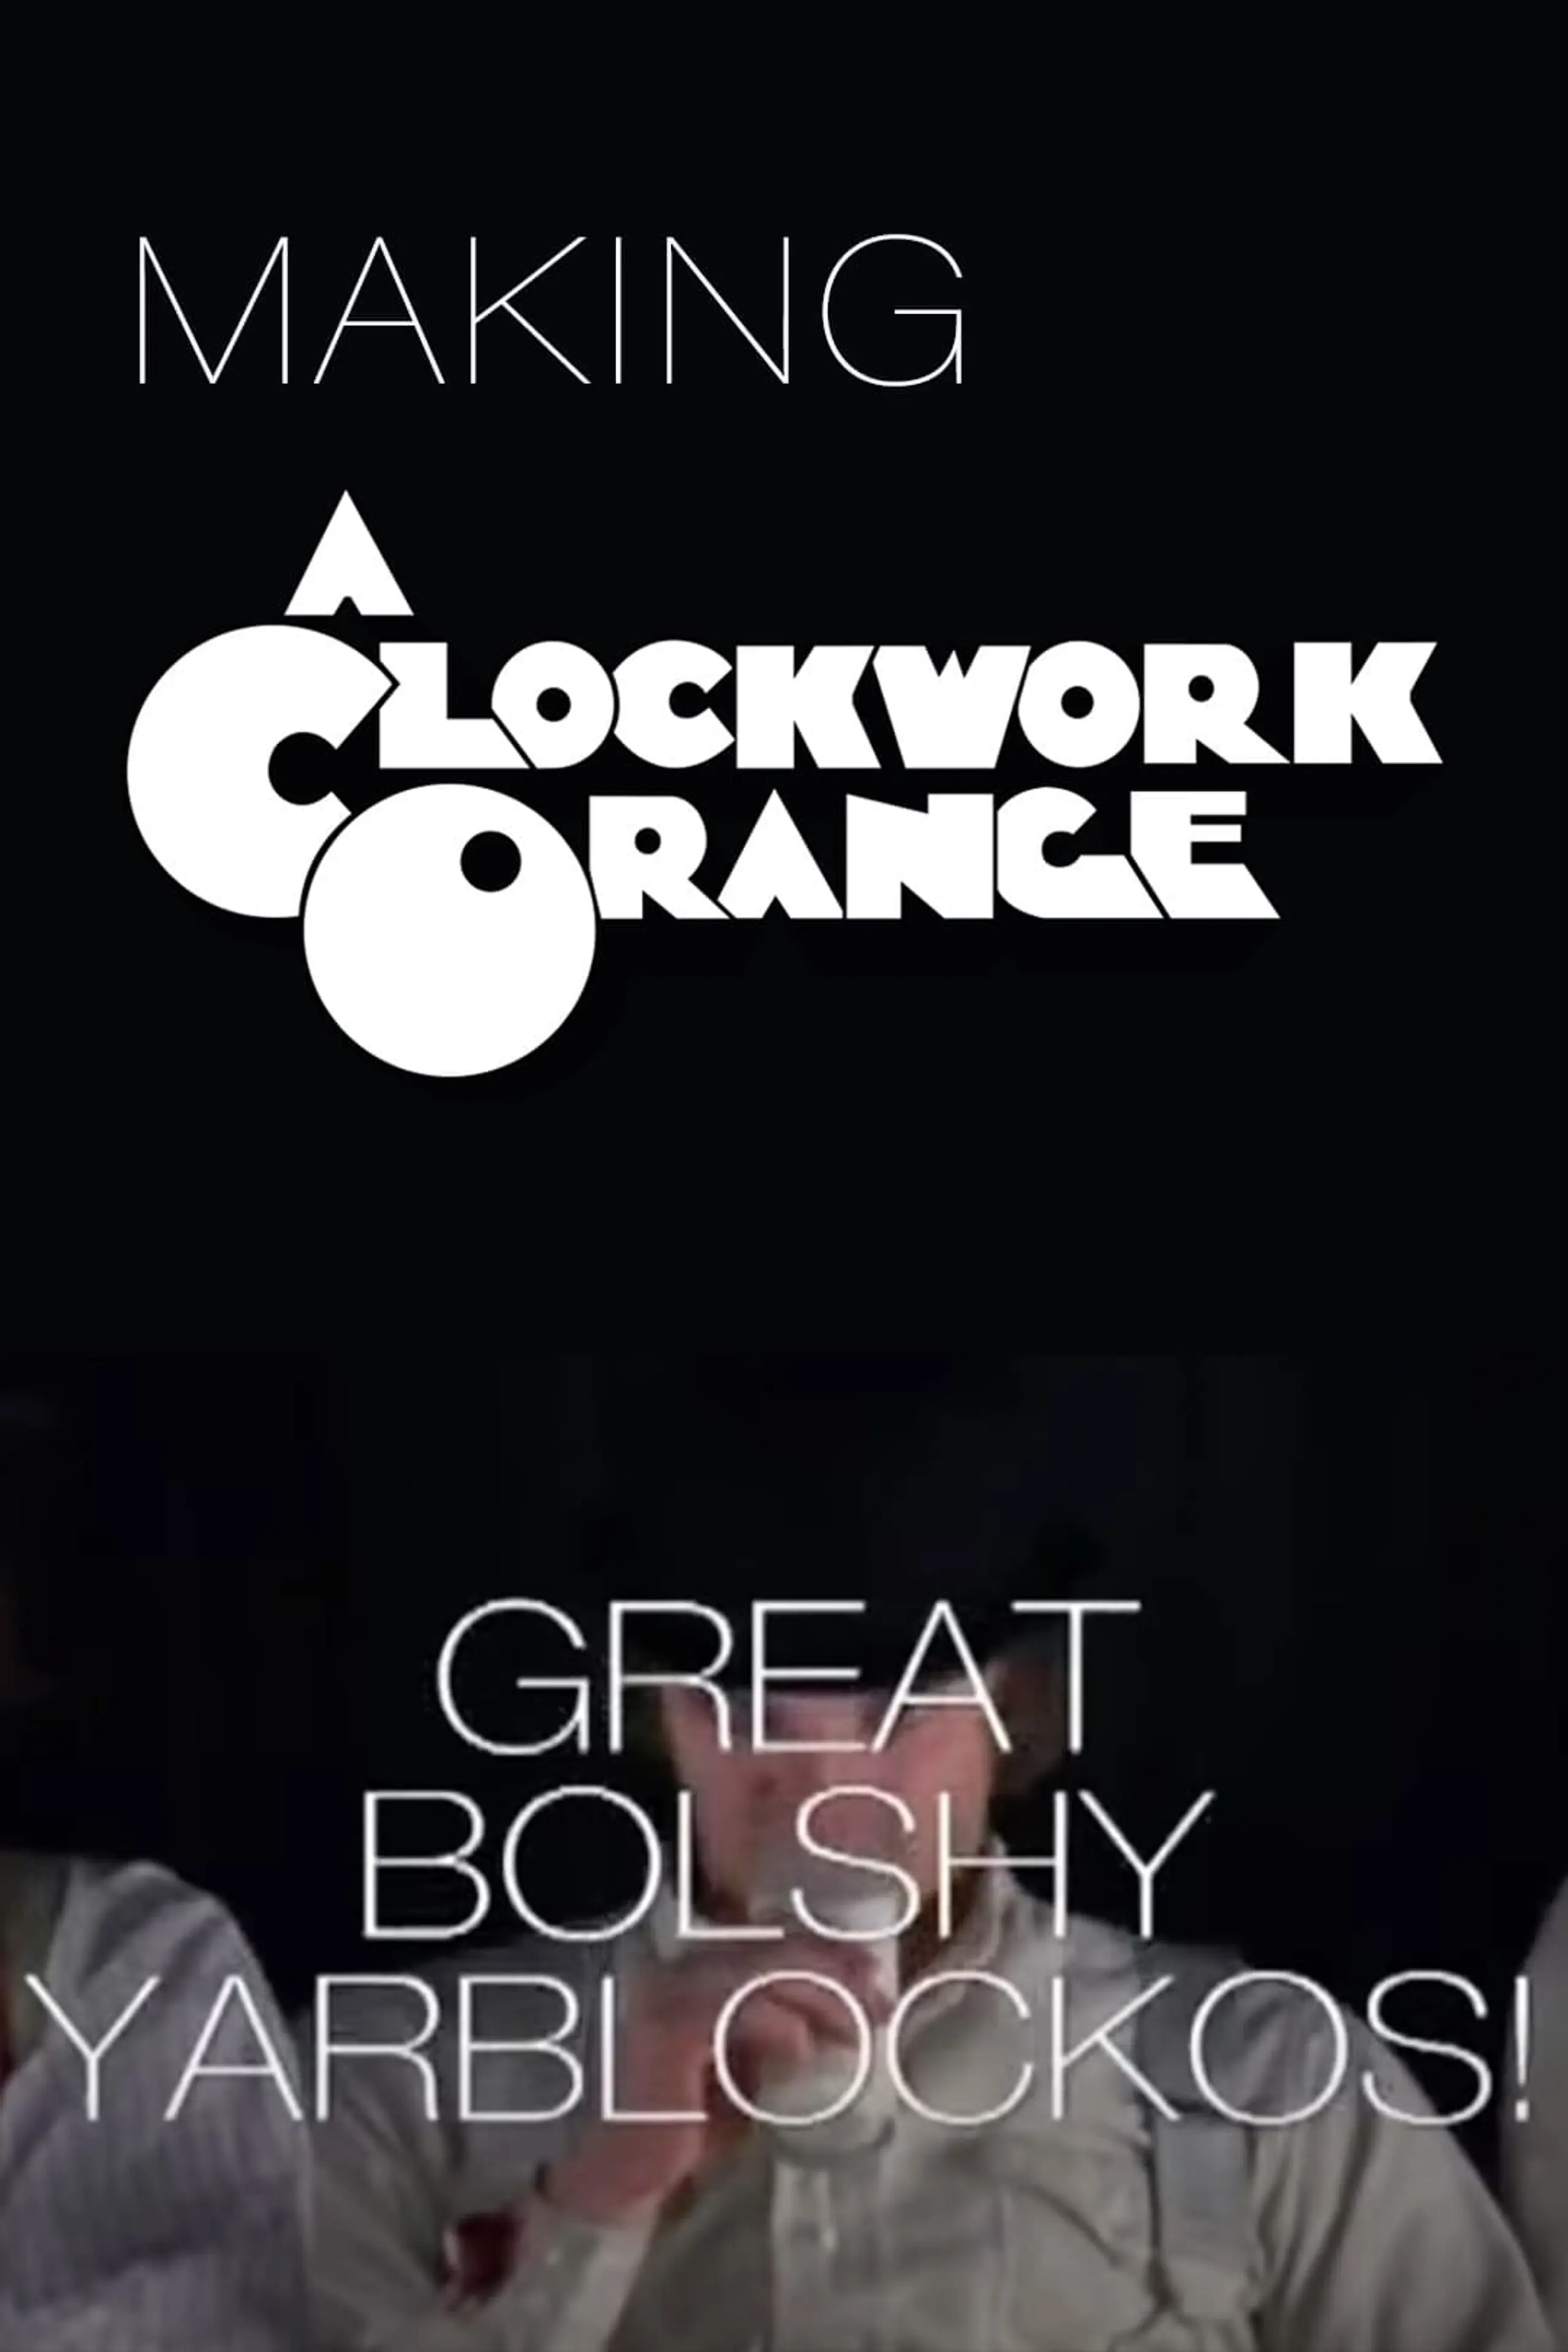 Great Bolshy Yarblockos!: Making A Clockwork Orange